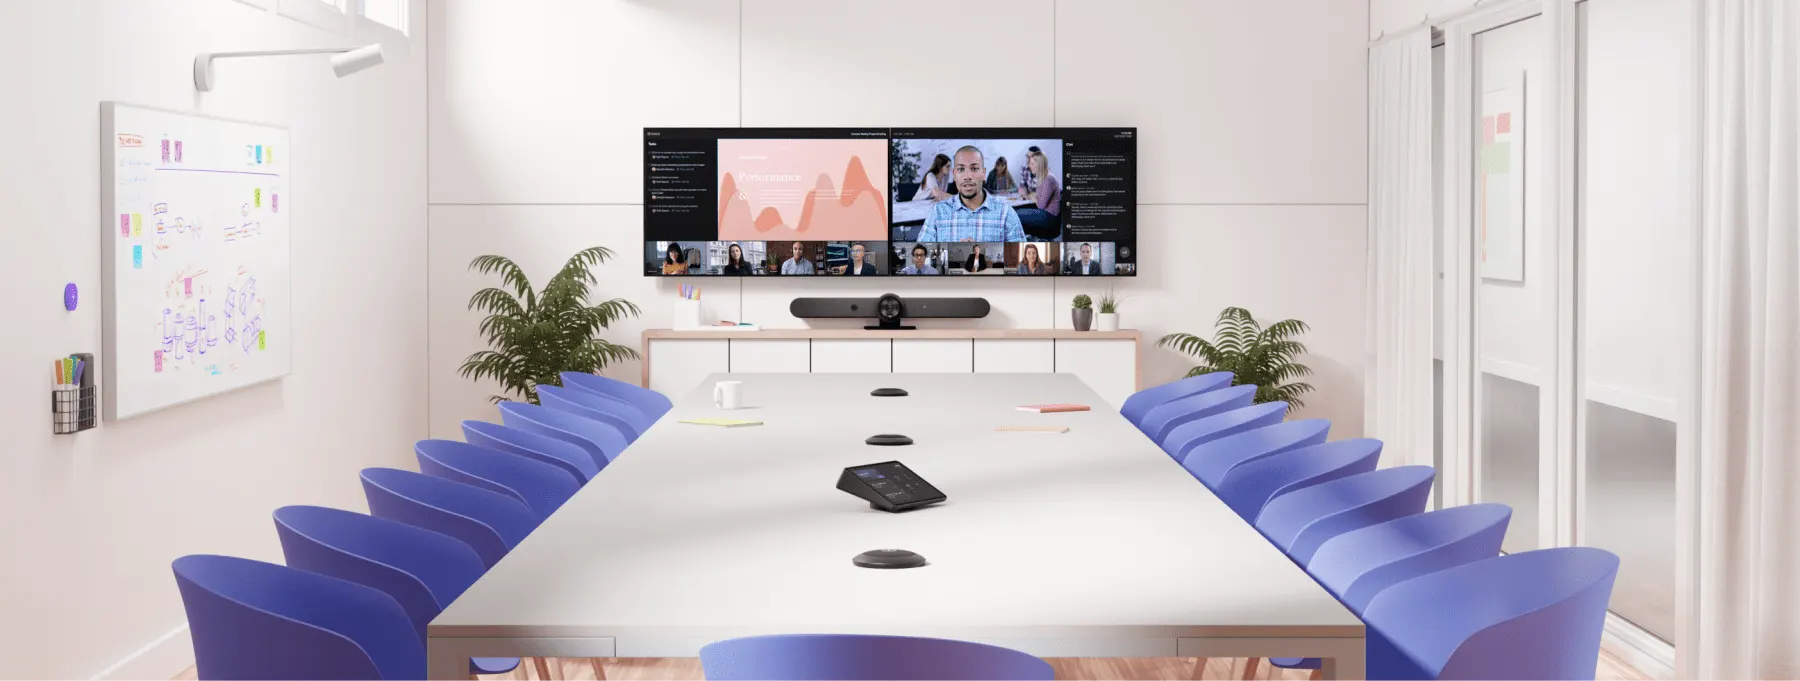 microsoft solutions boardroom desktop 2